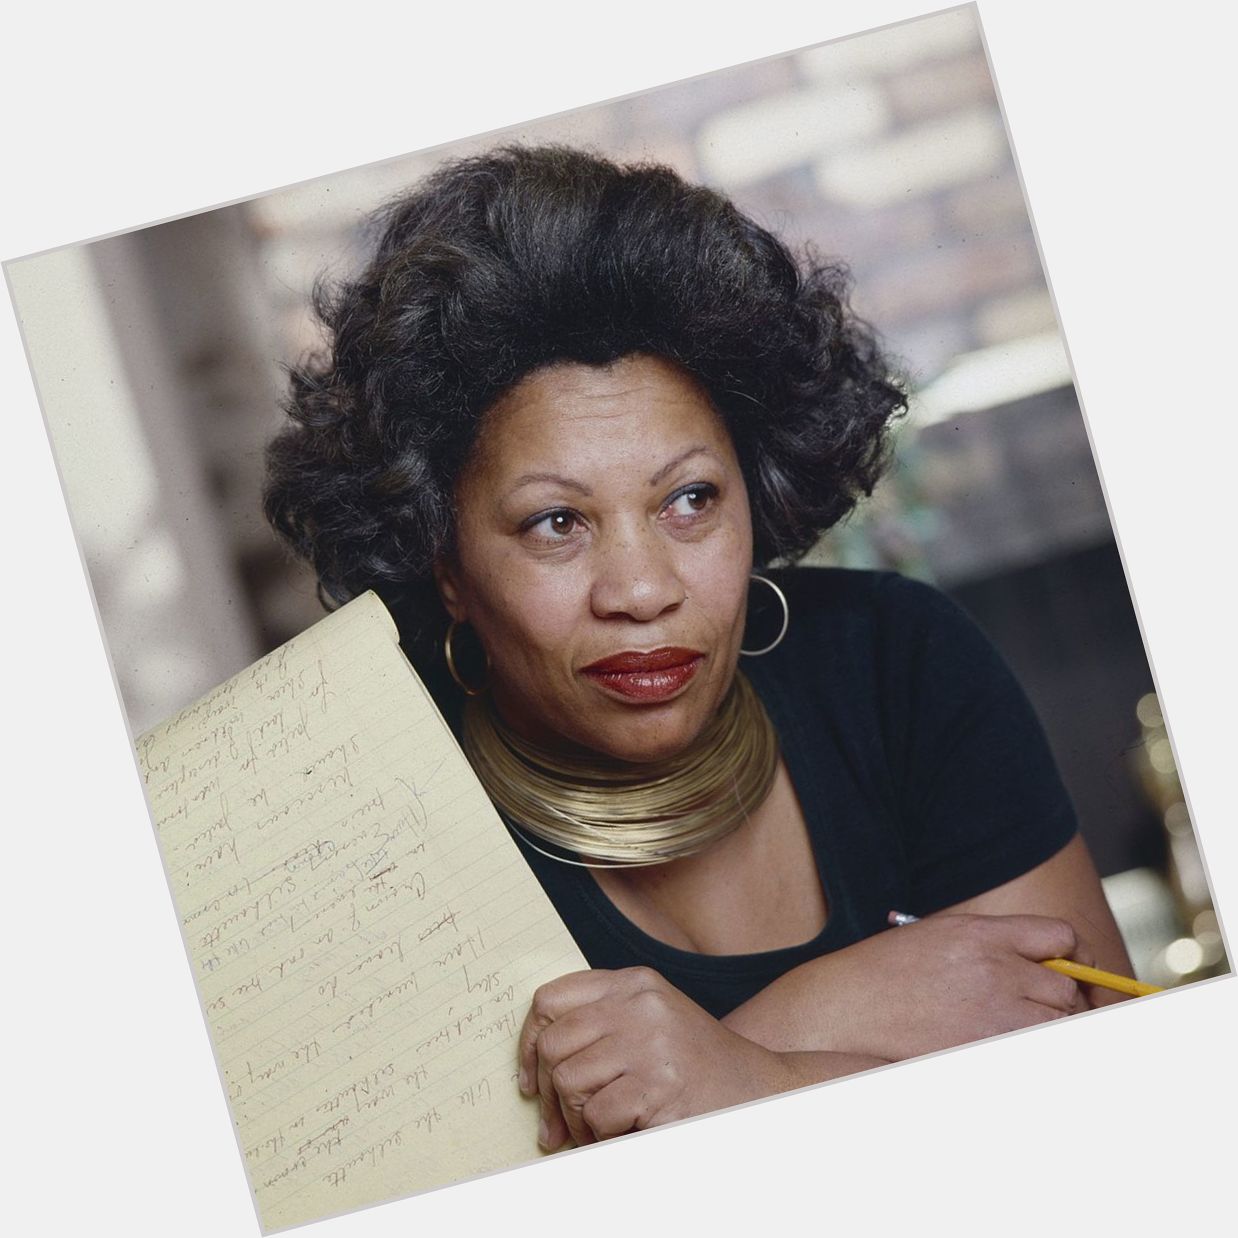 Happy Birthday Toni Morrison! 